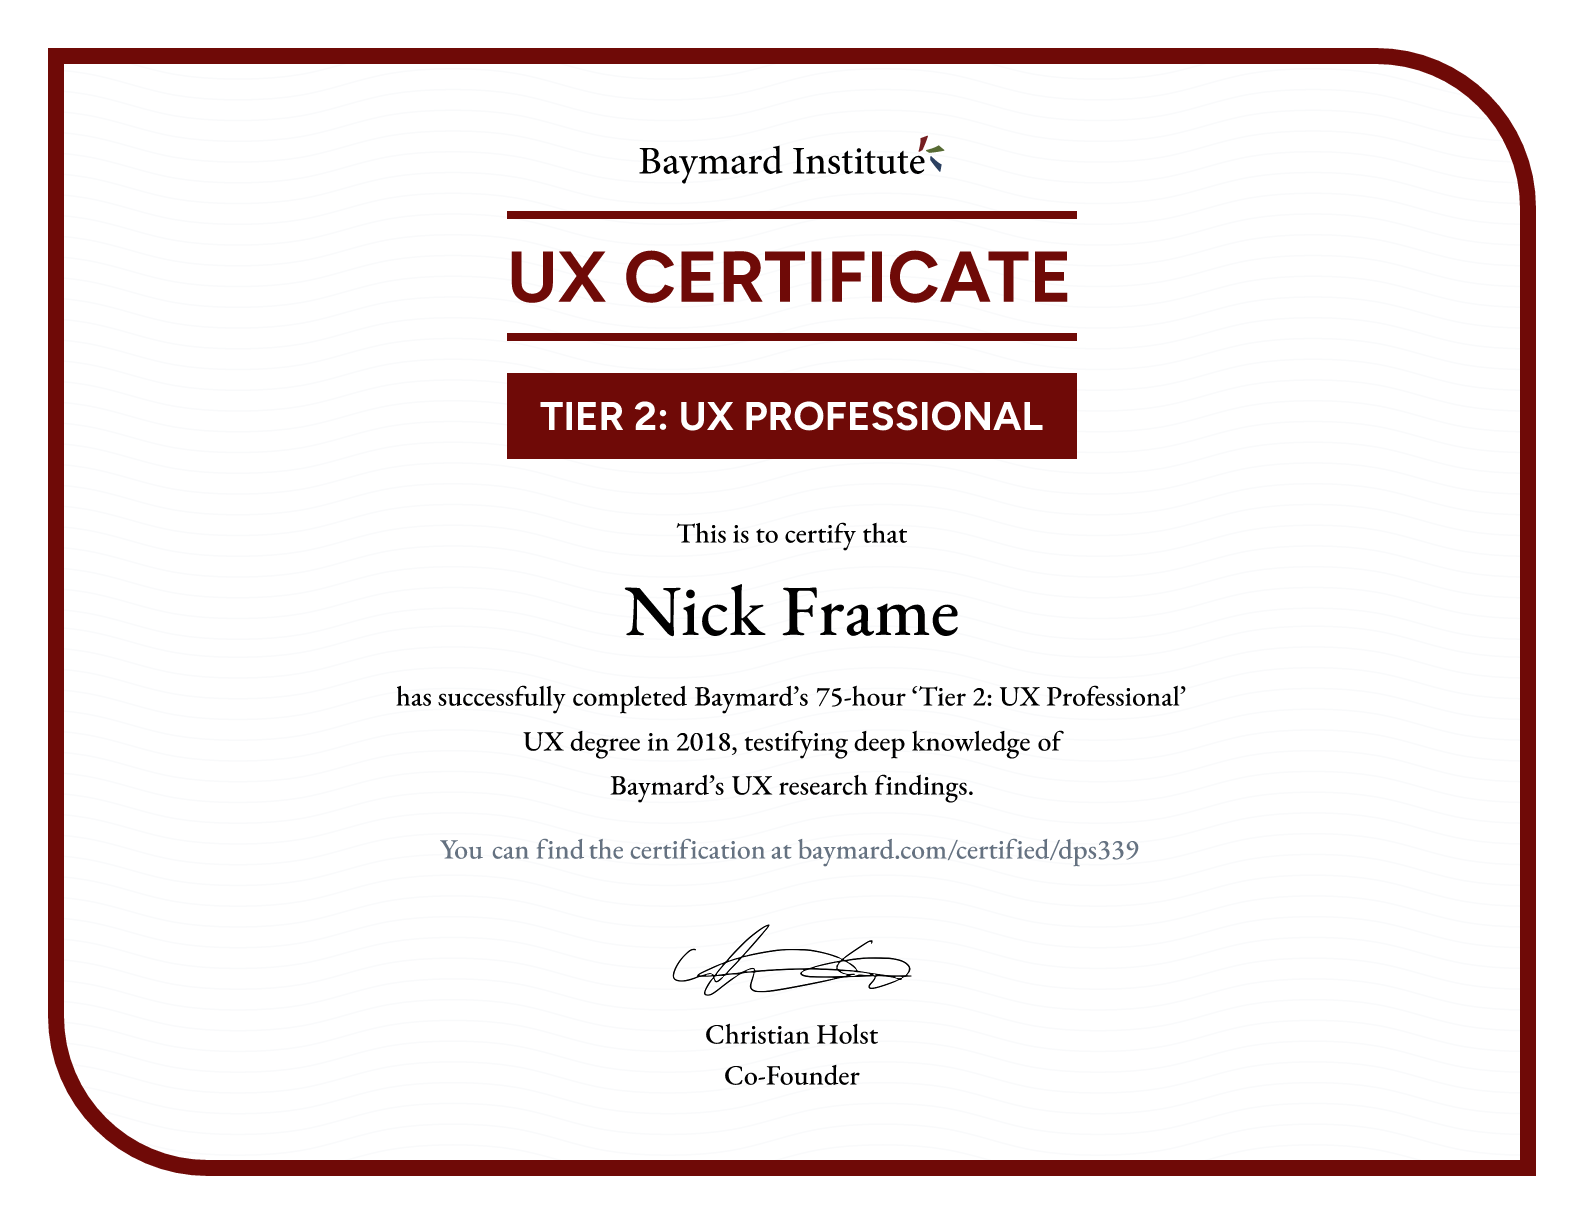 Nick Frame’s certificate